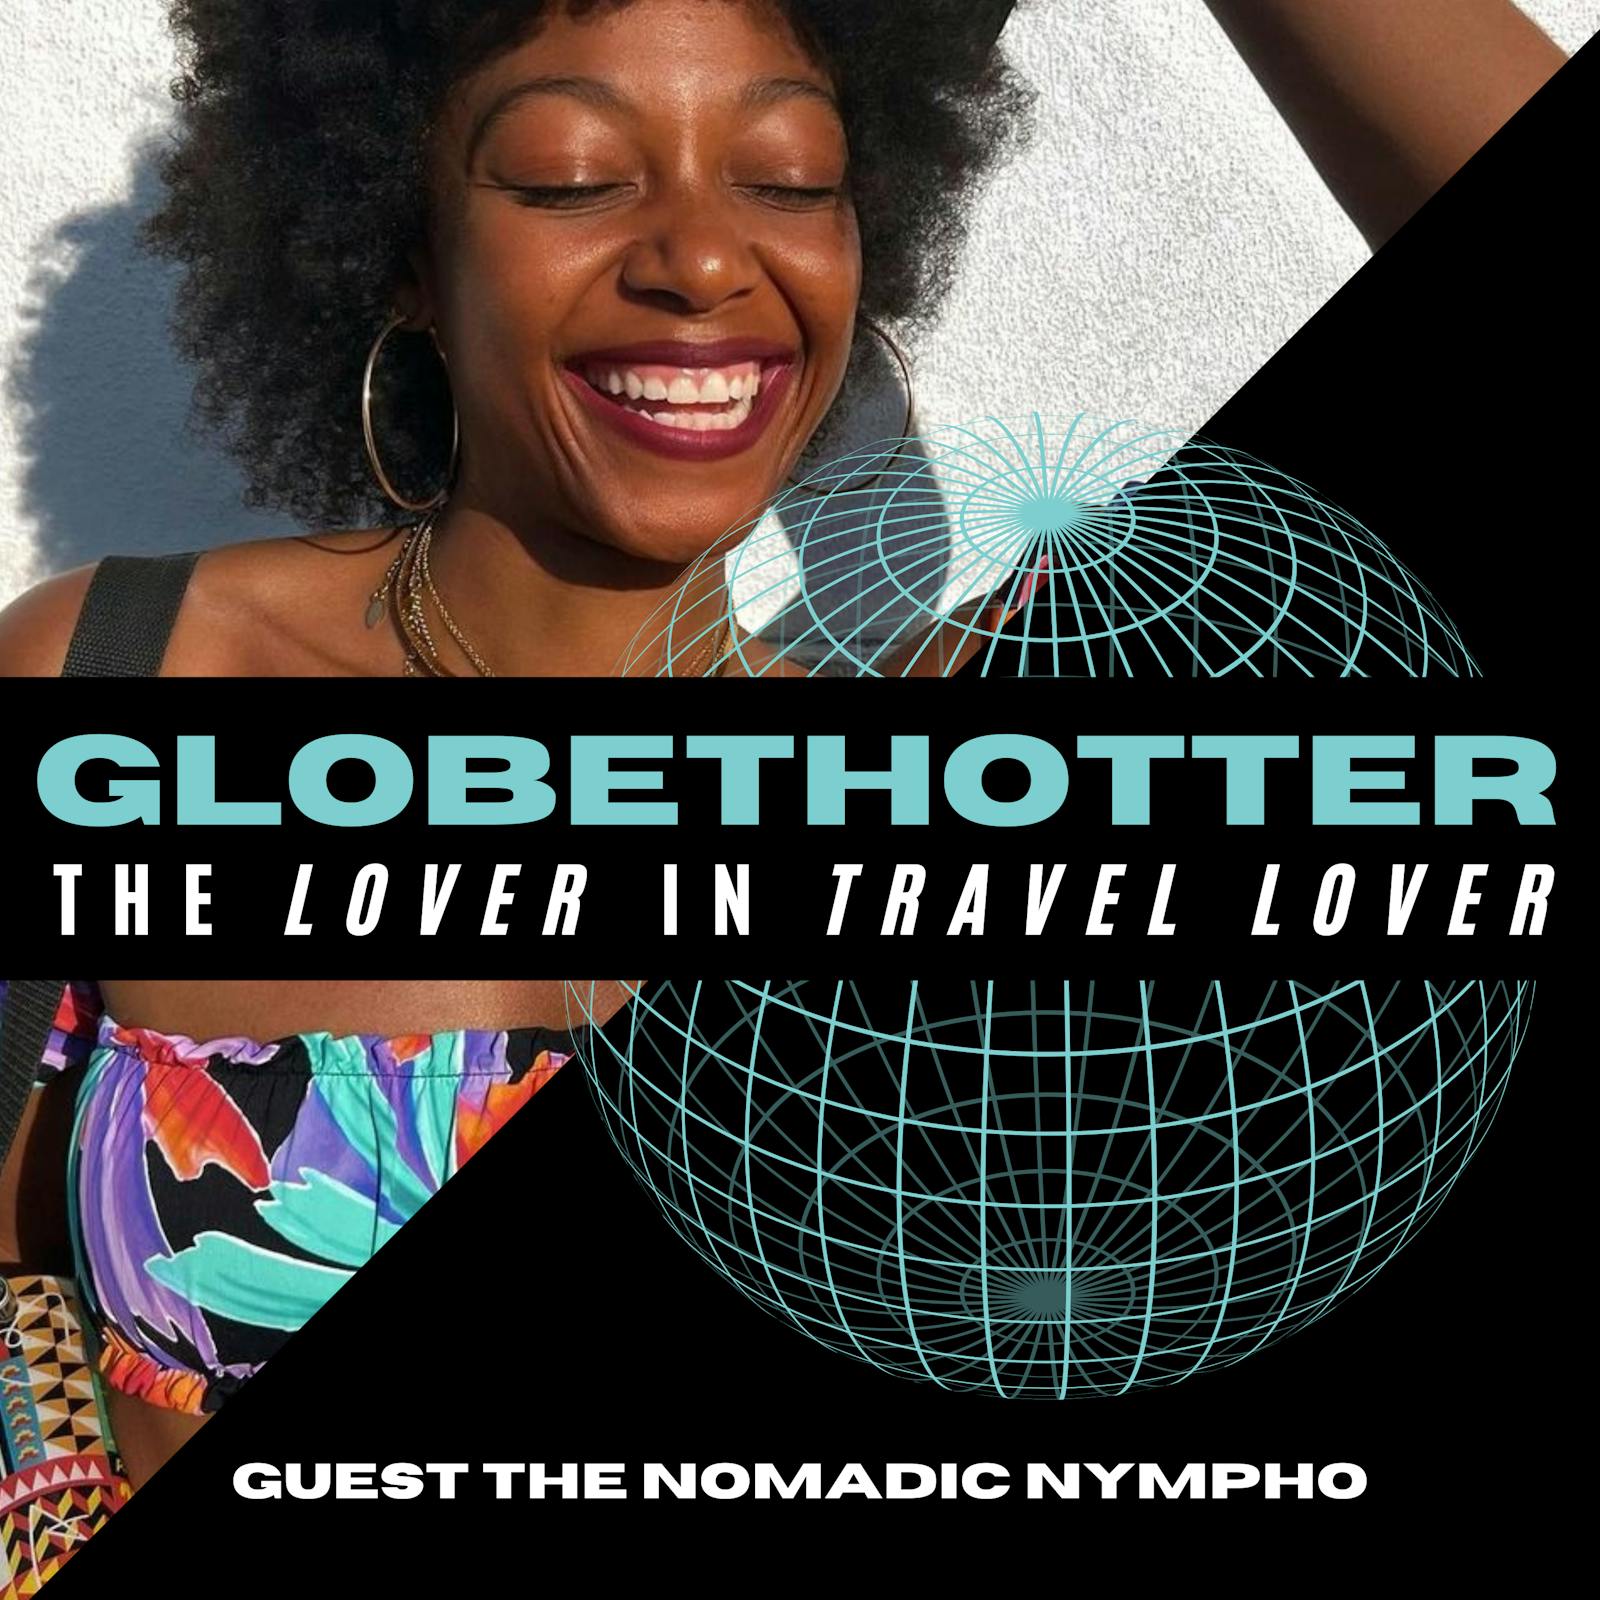 Catch The Nomadic Nympho on #GlobethotterPod 💃